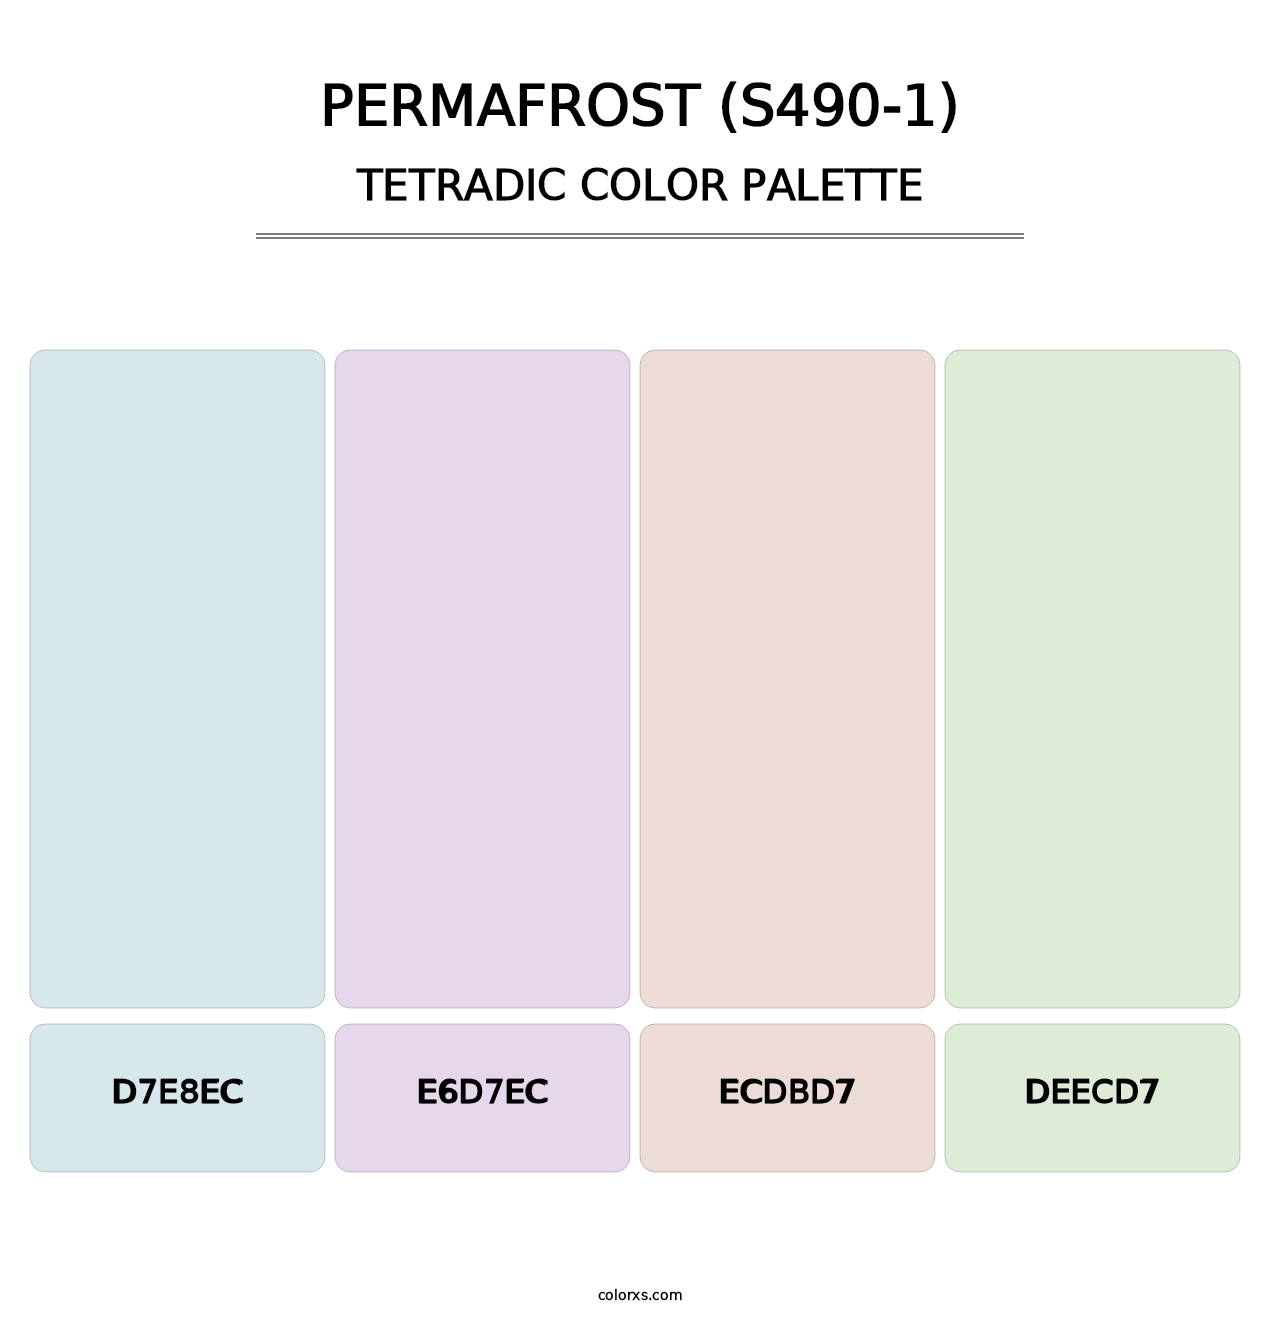 Permafrost (S490-1) - Tetradic Color Palette